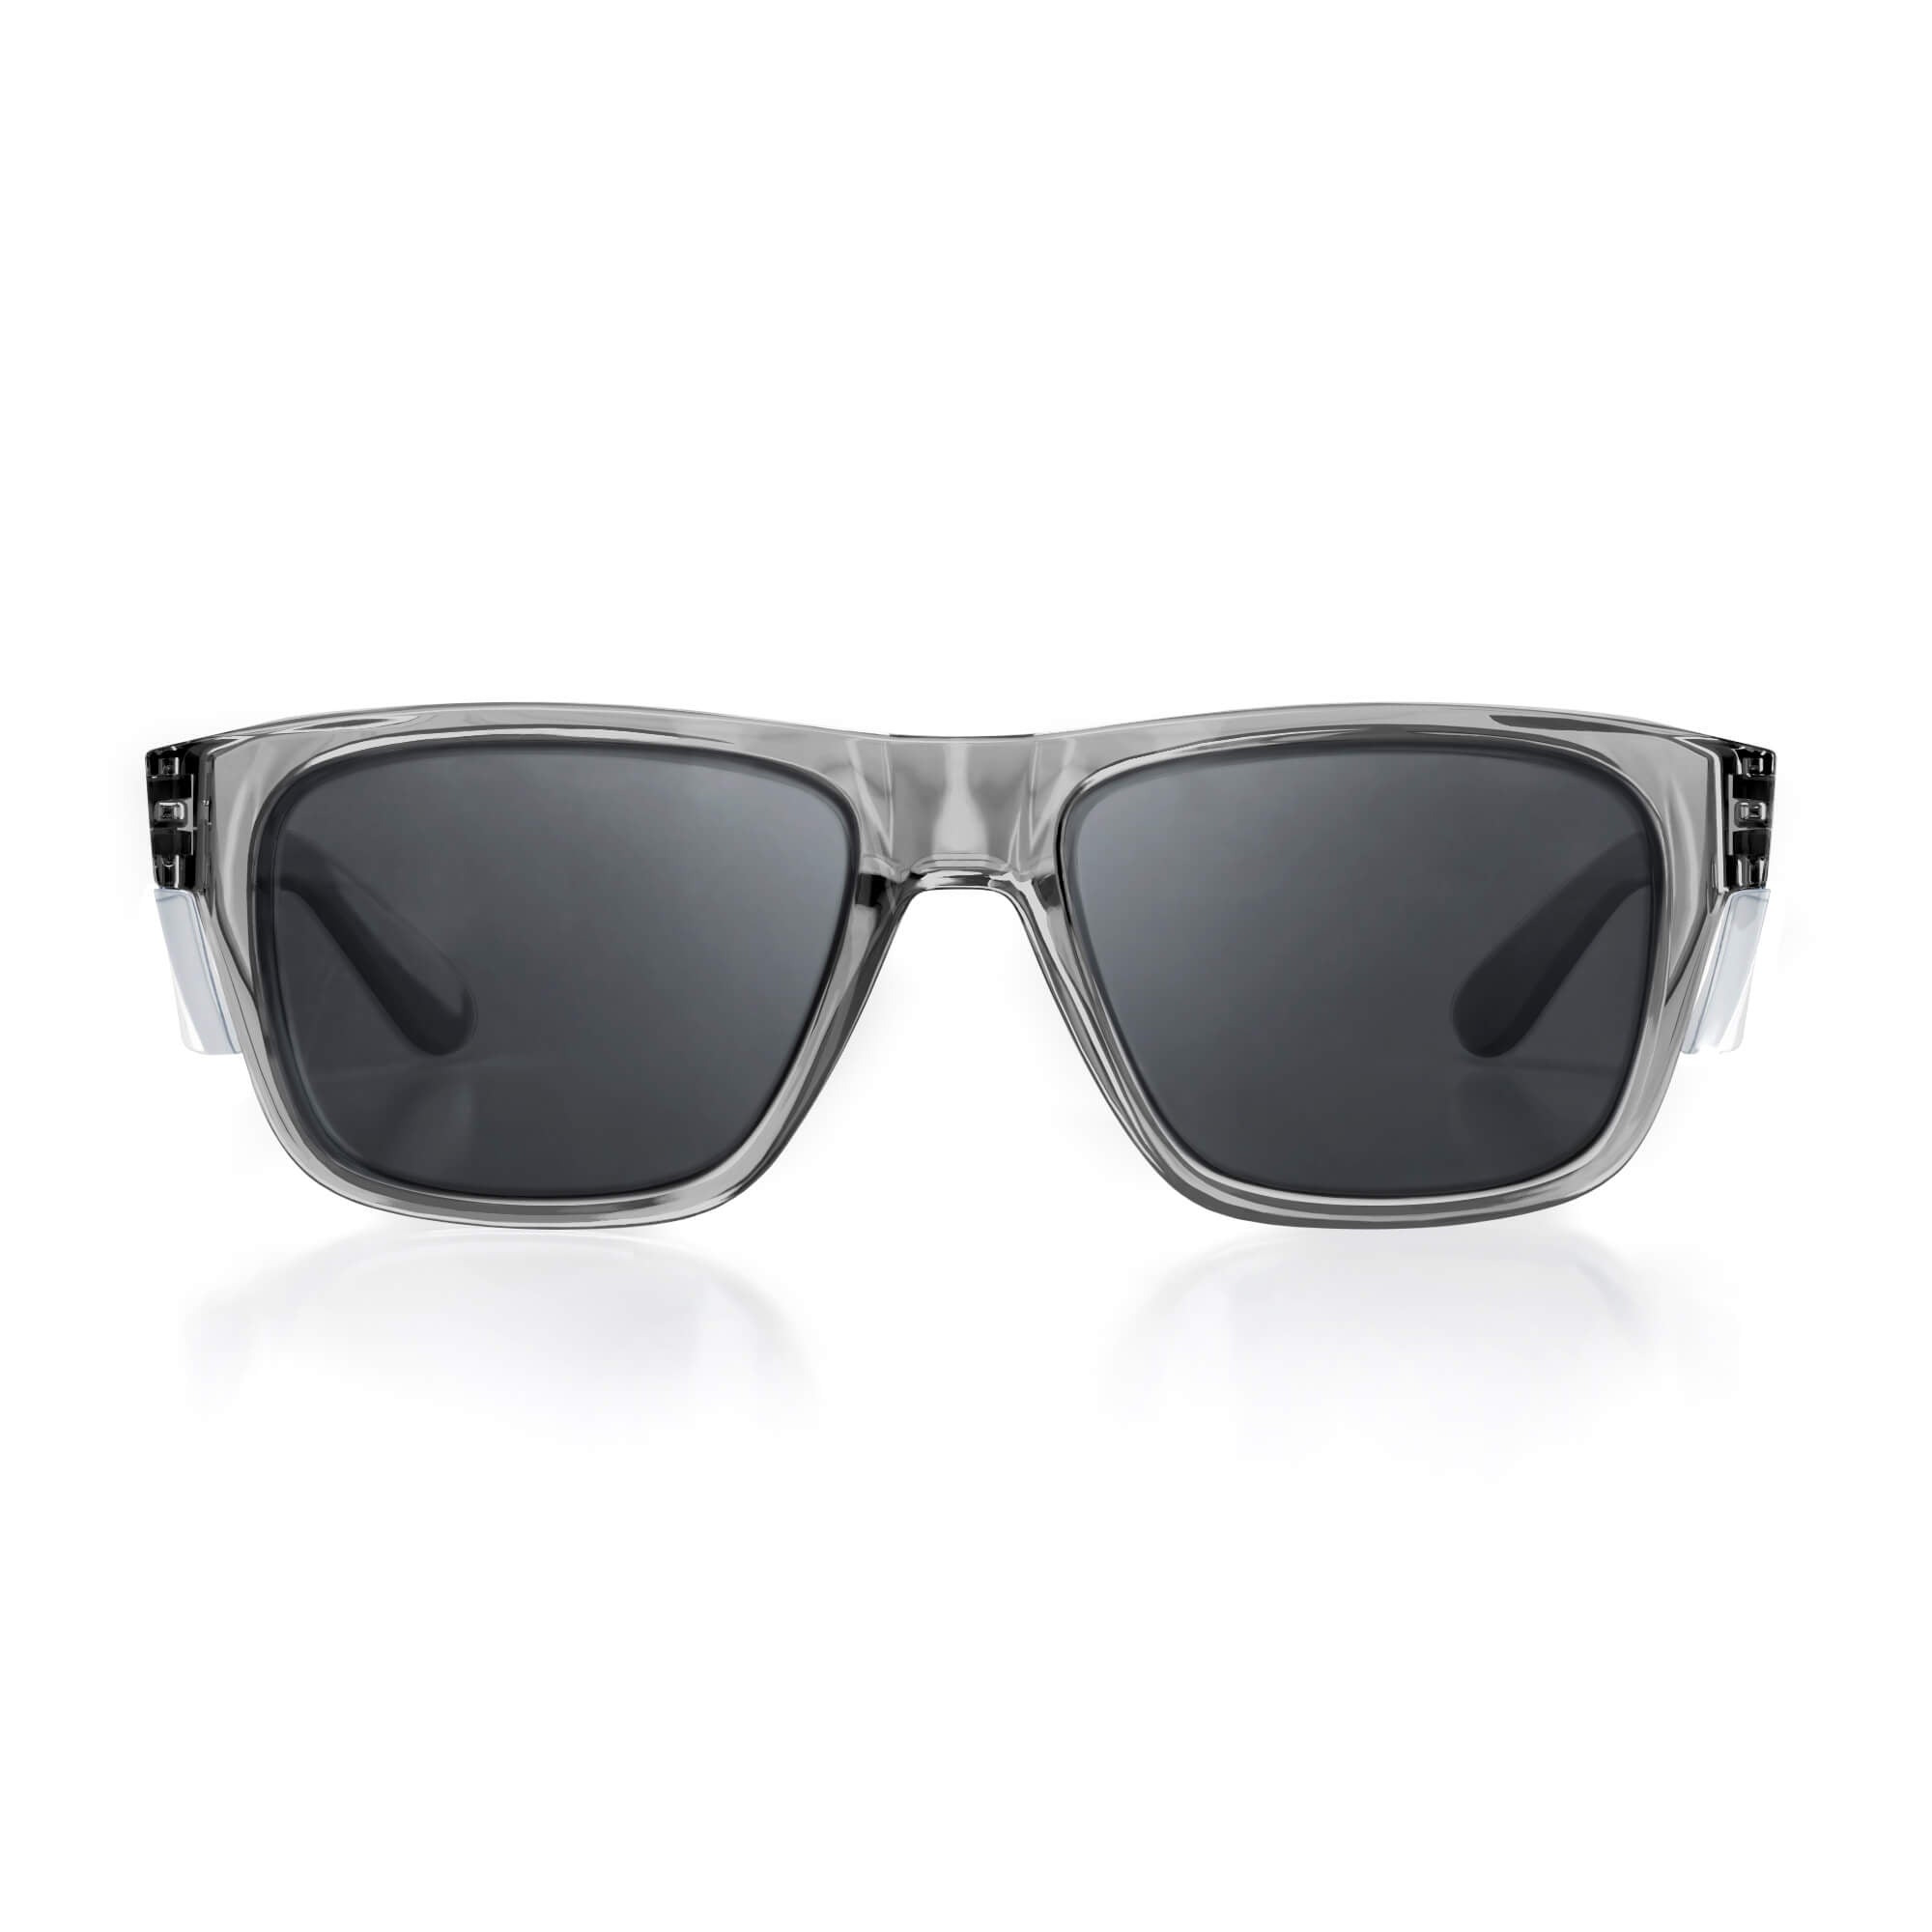 SafeStyle Fusions Graphite Frame/ Polarised UV400 Lens glasses